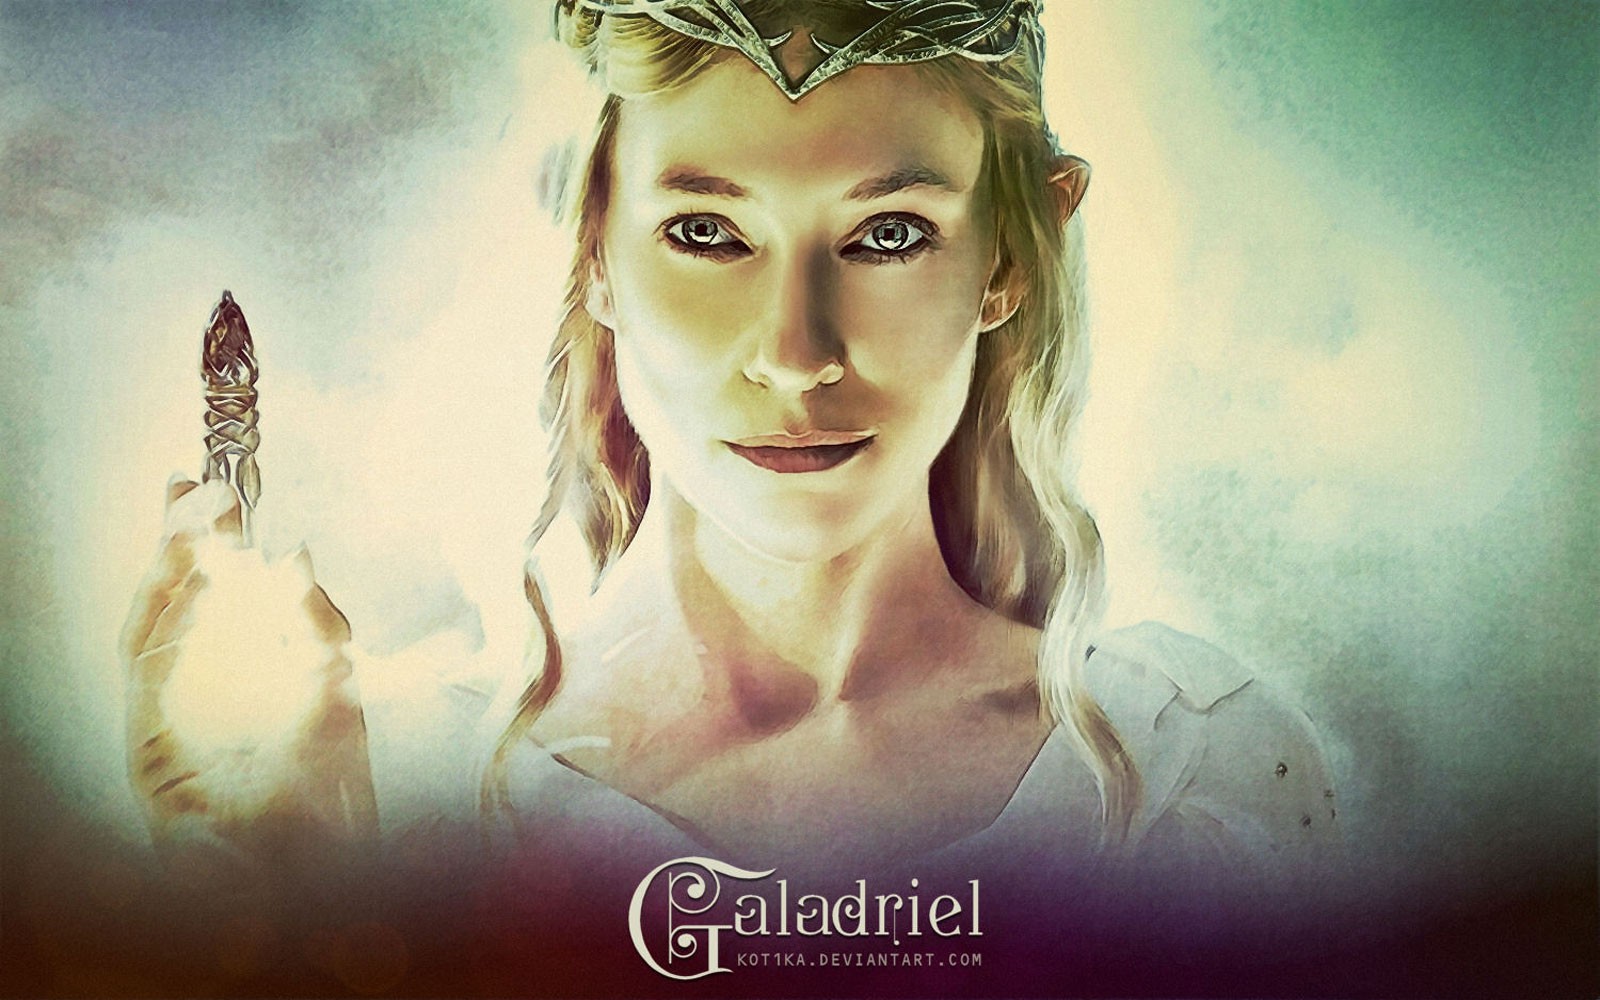 Galadriel, Cate Blanchett, Anna Kotika, DeviantArt, The Lord Of The Rings Wallpaper